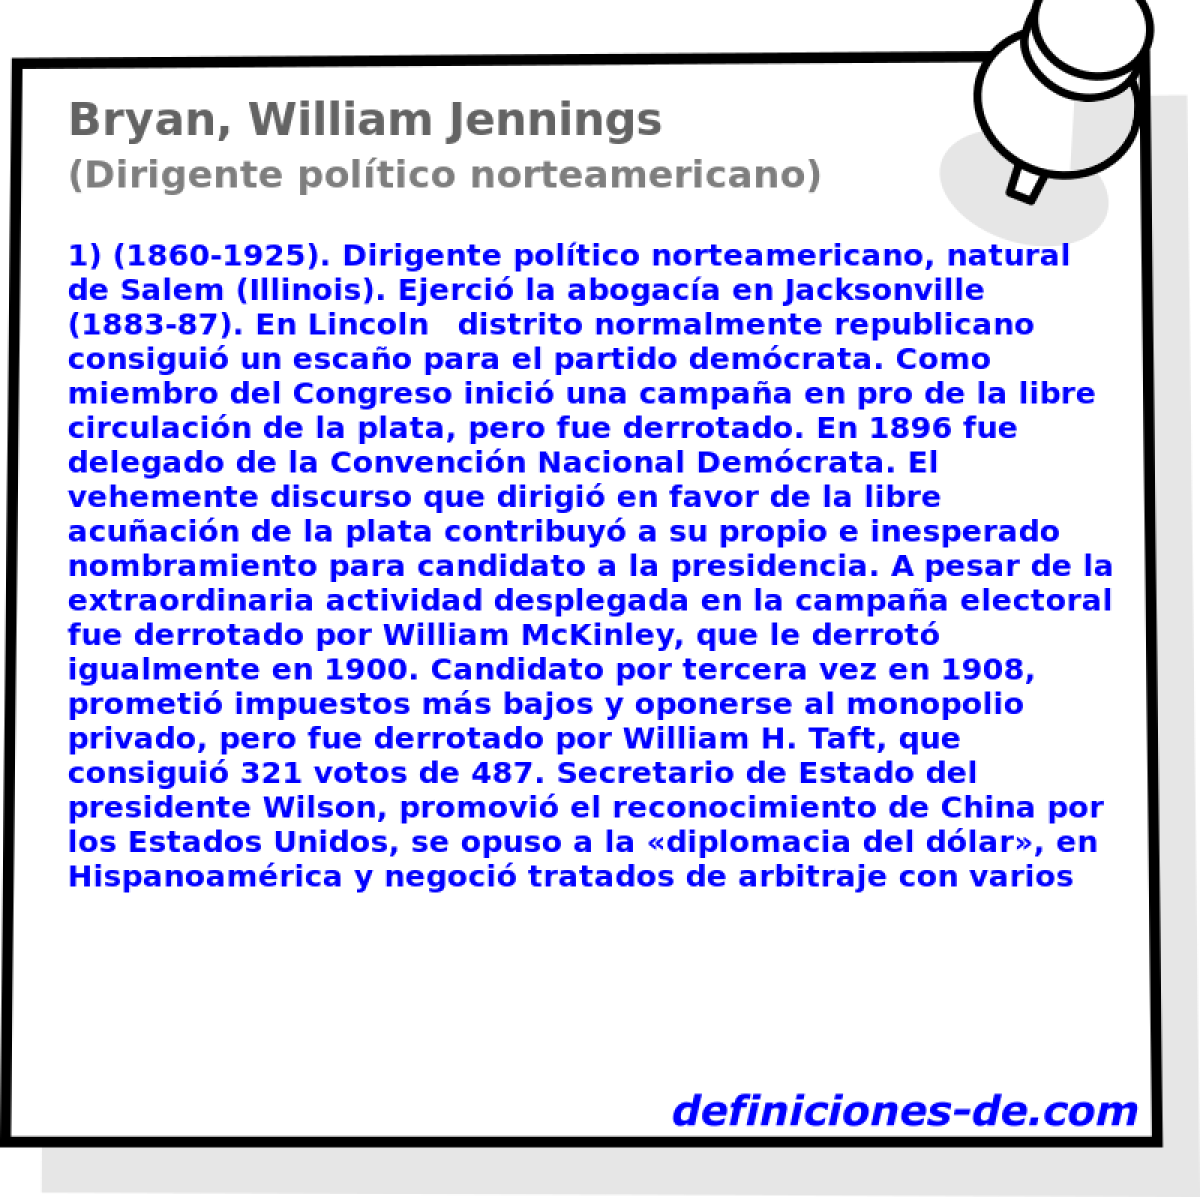 Bryan, William Jennings (Dirigente poltico norteamericano)